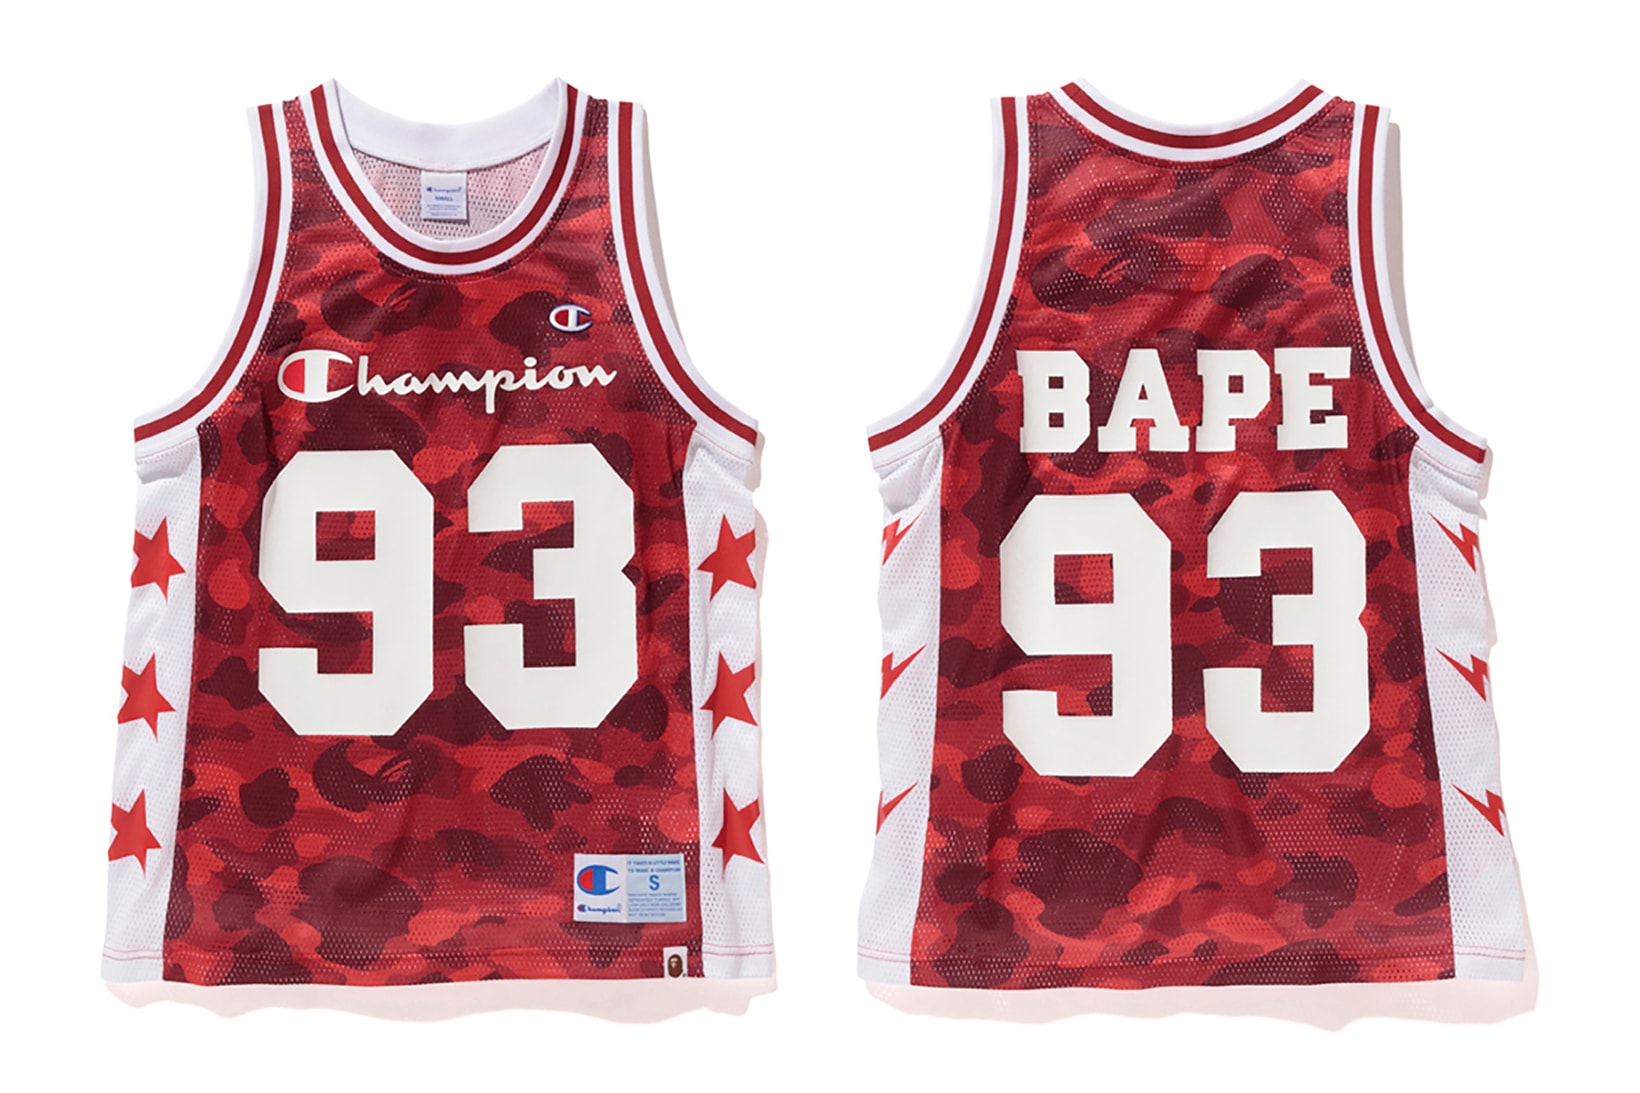 Bape x Champion Red Camouflage Basketball Vest